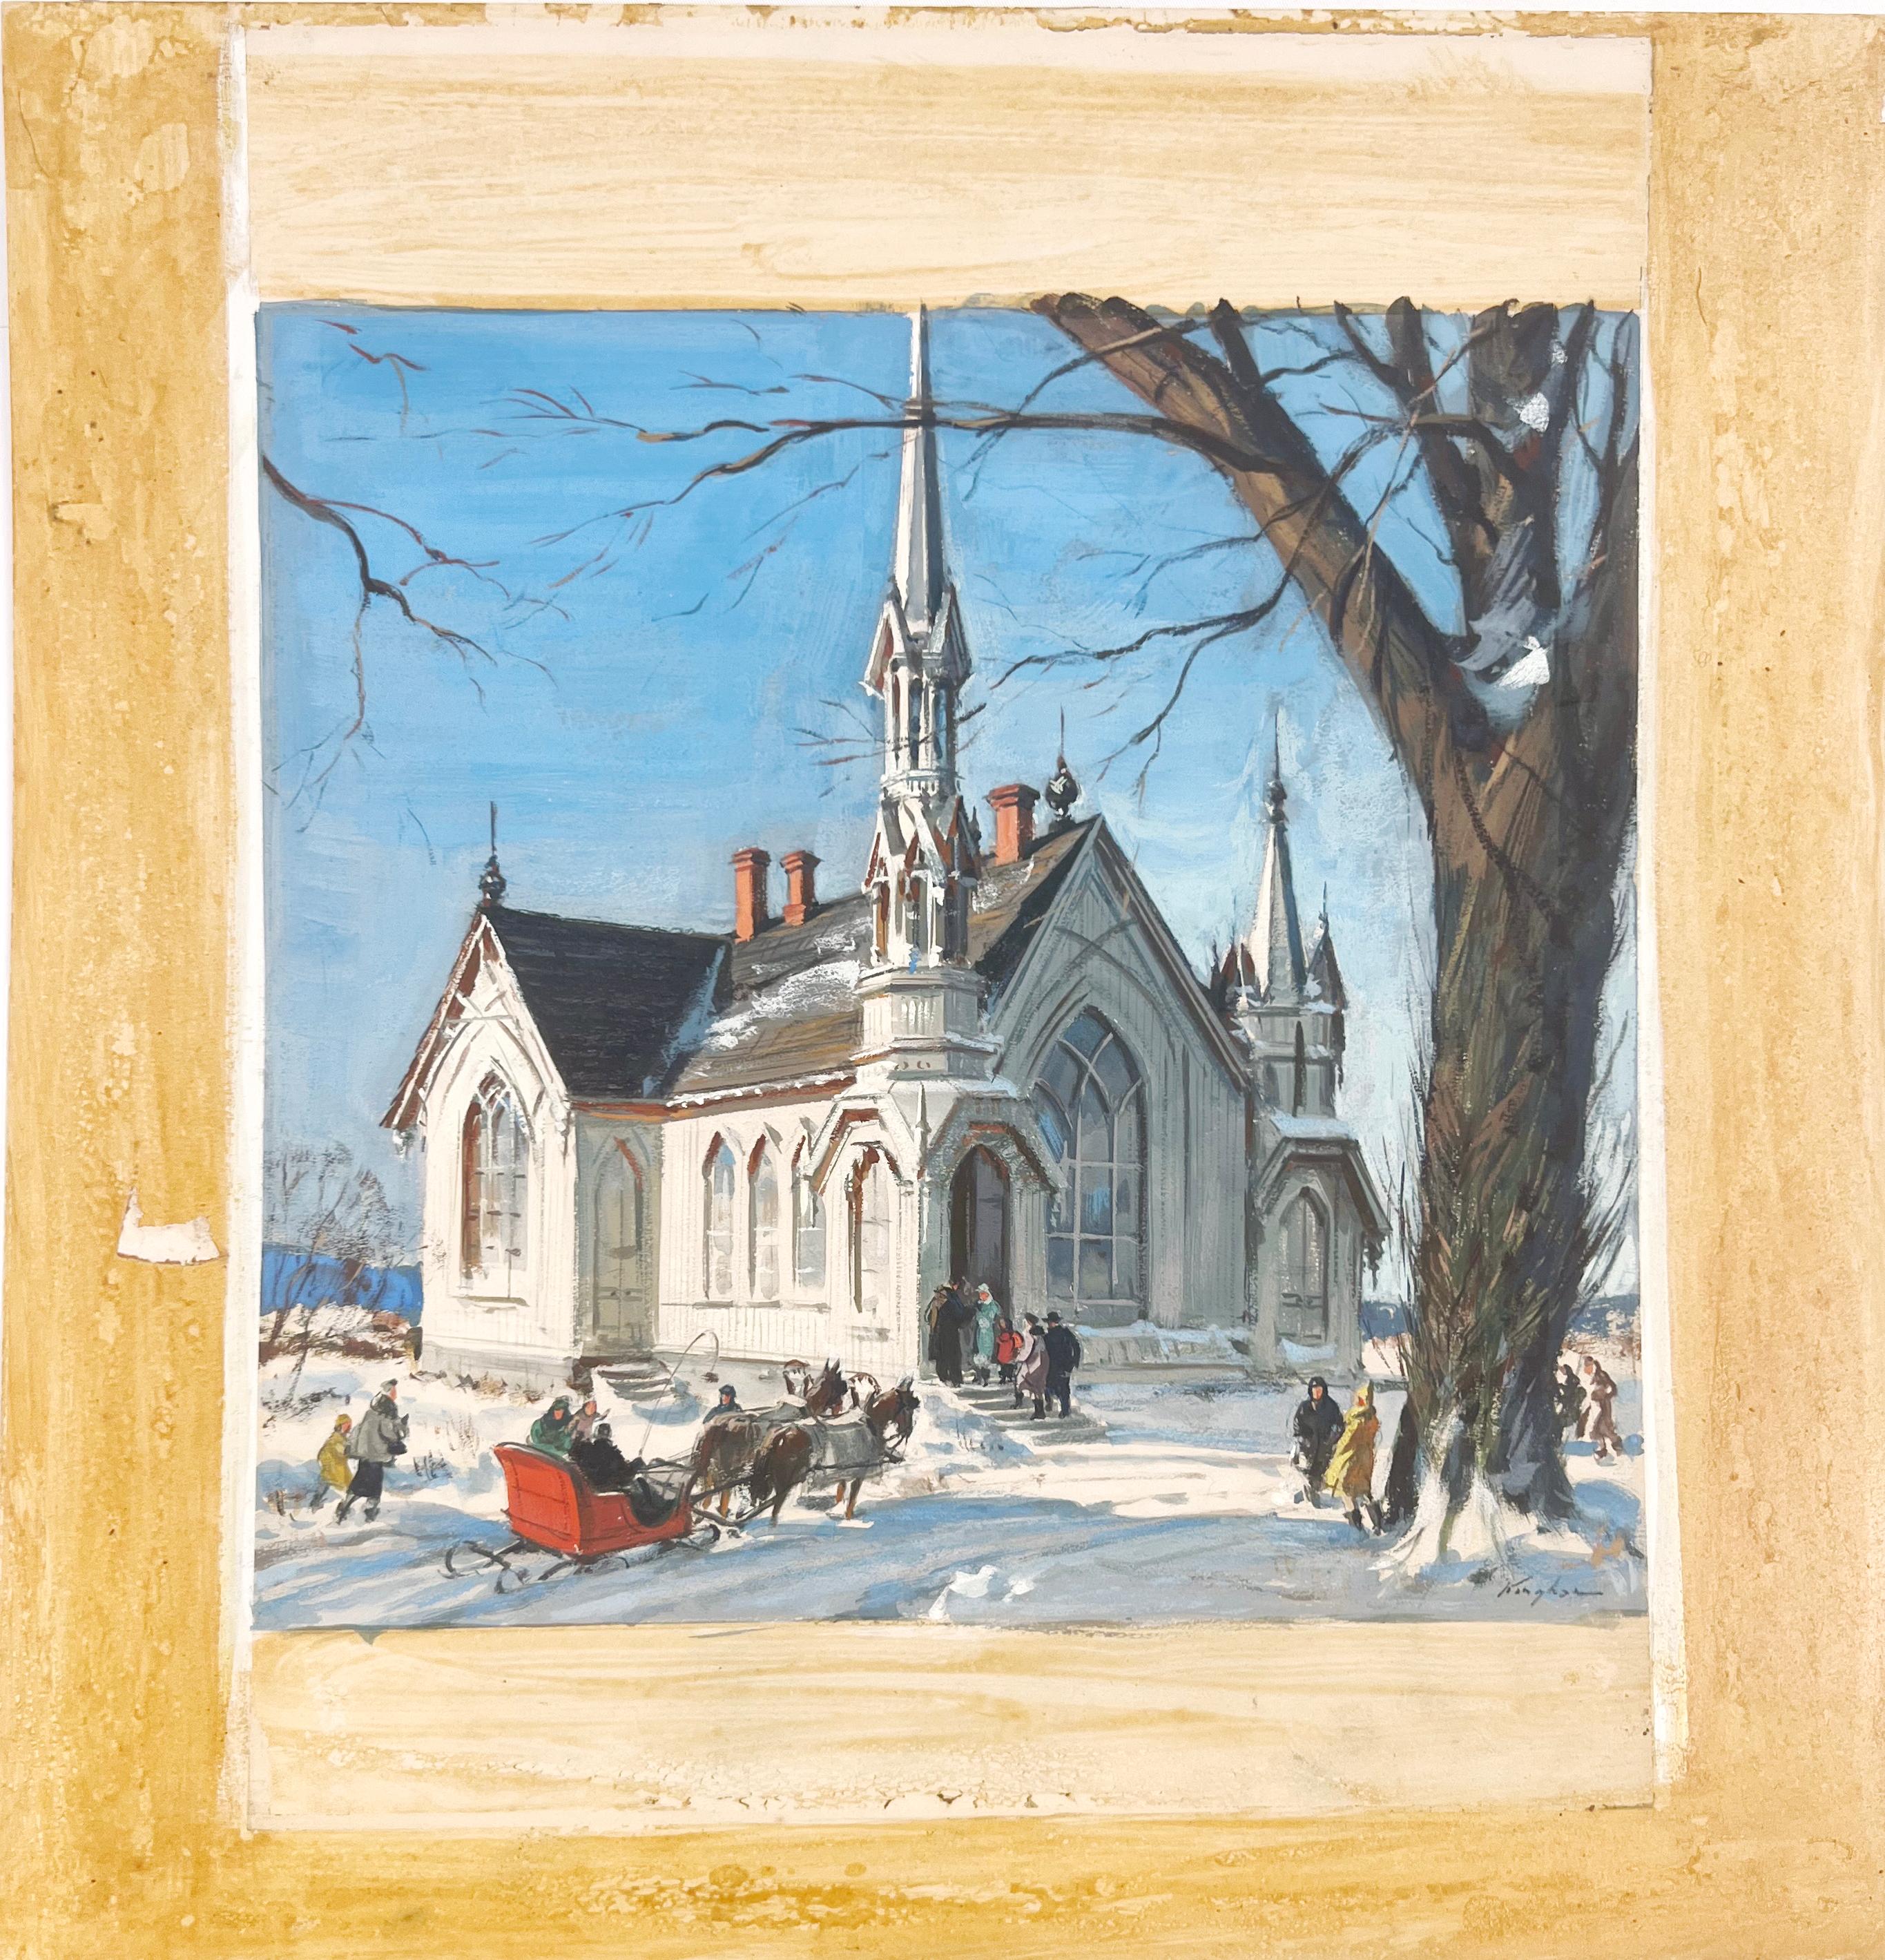 Arriving at Church in Winter – figurative, realistische Illustration im Angebot 6